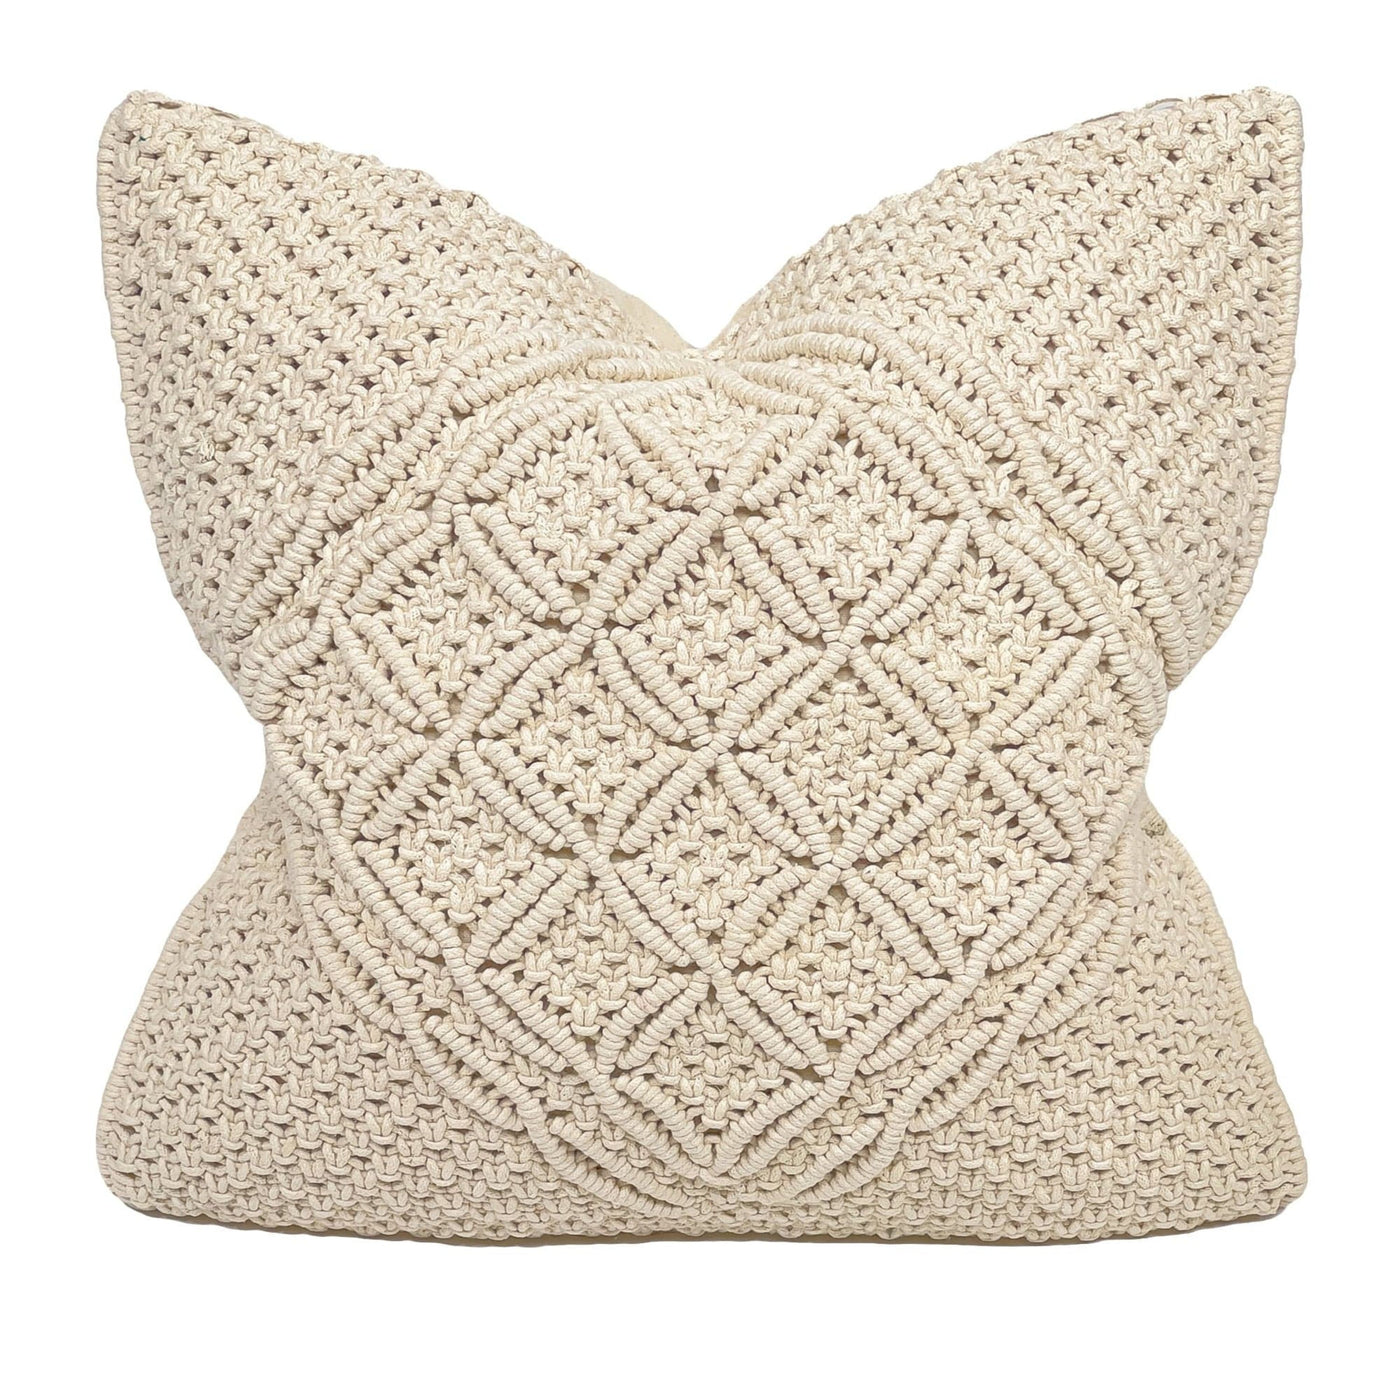 ADITI - Embroidered Boho Pillows